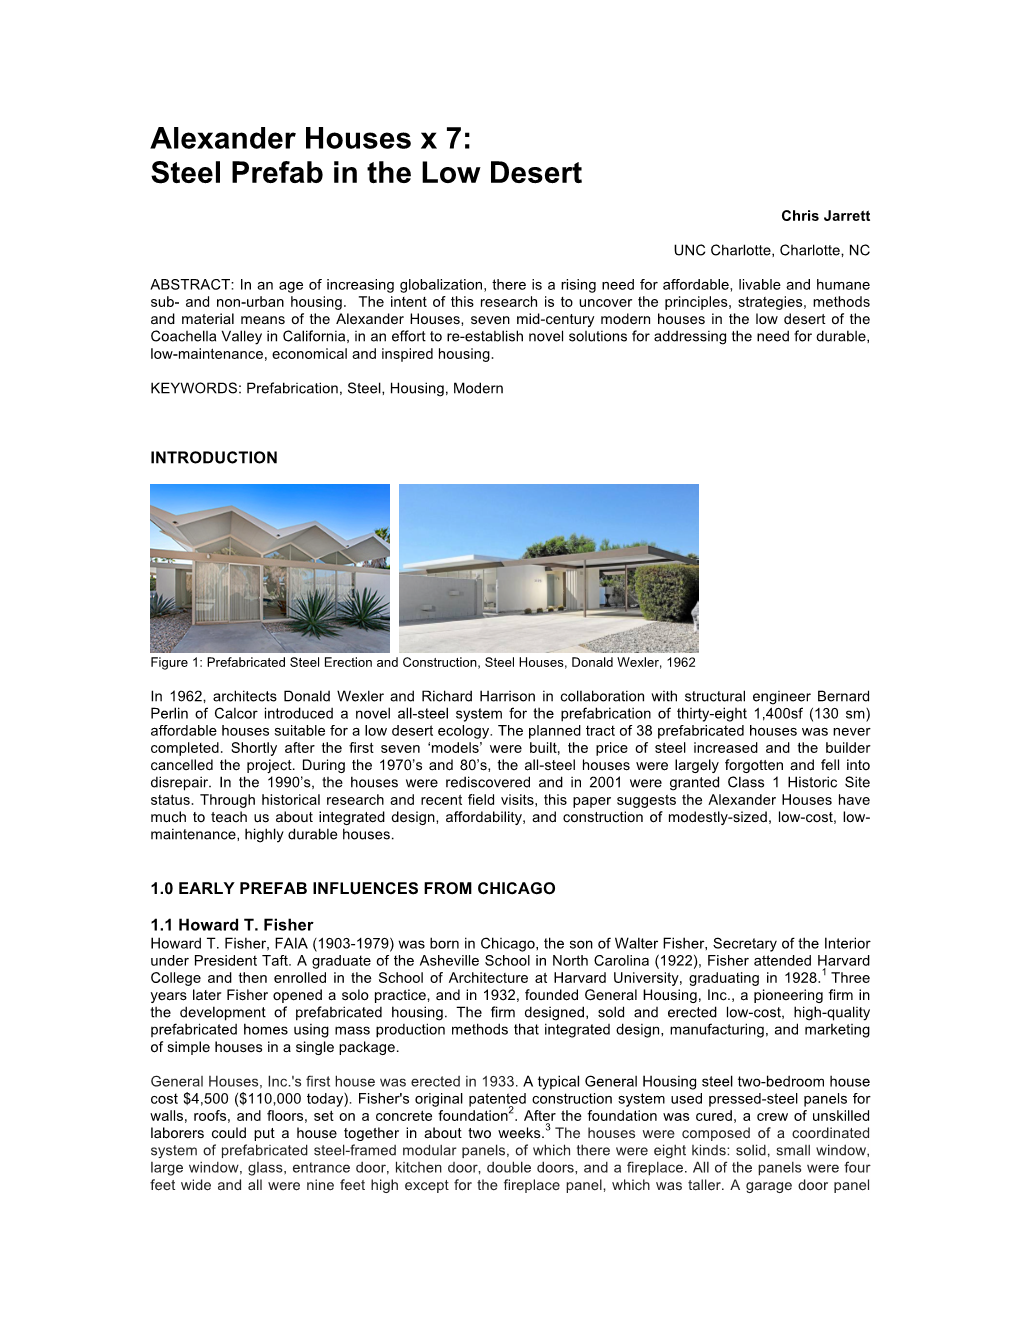 Alexander Houses X 7: Steel Prefab in the Low Desert